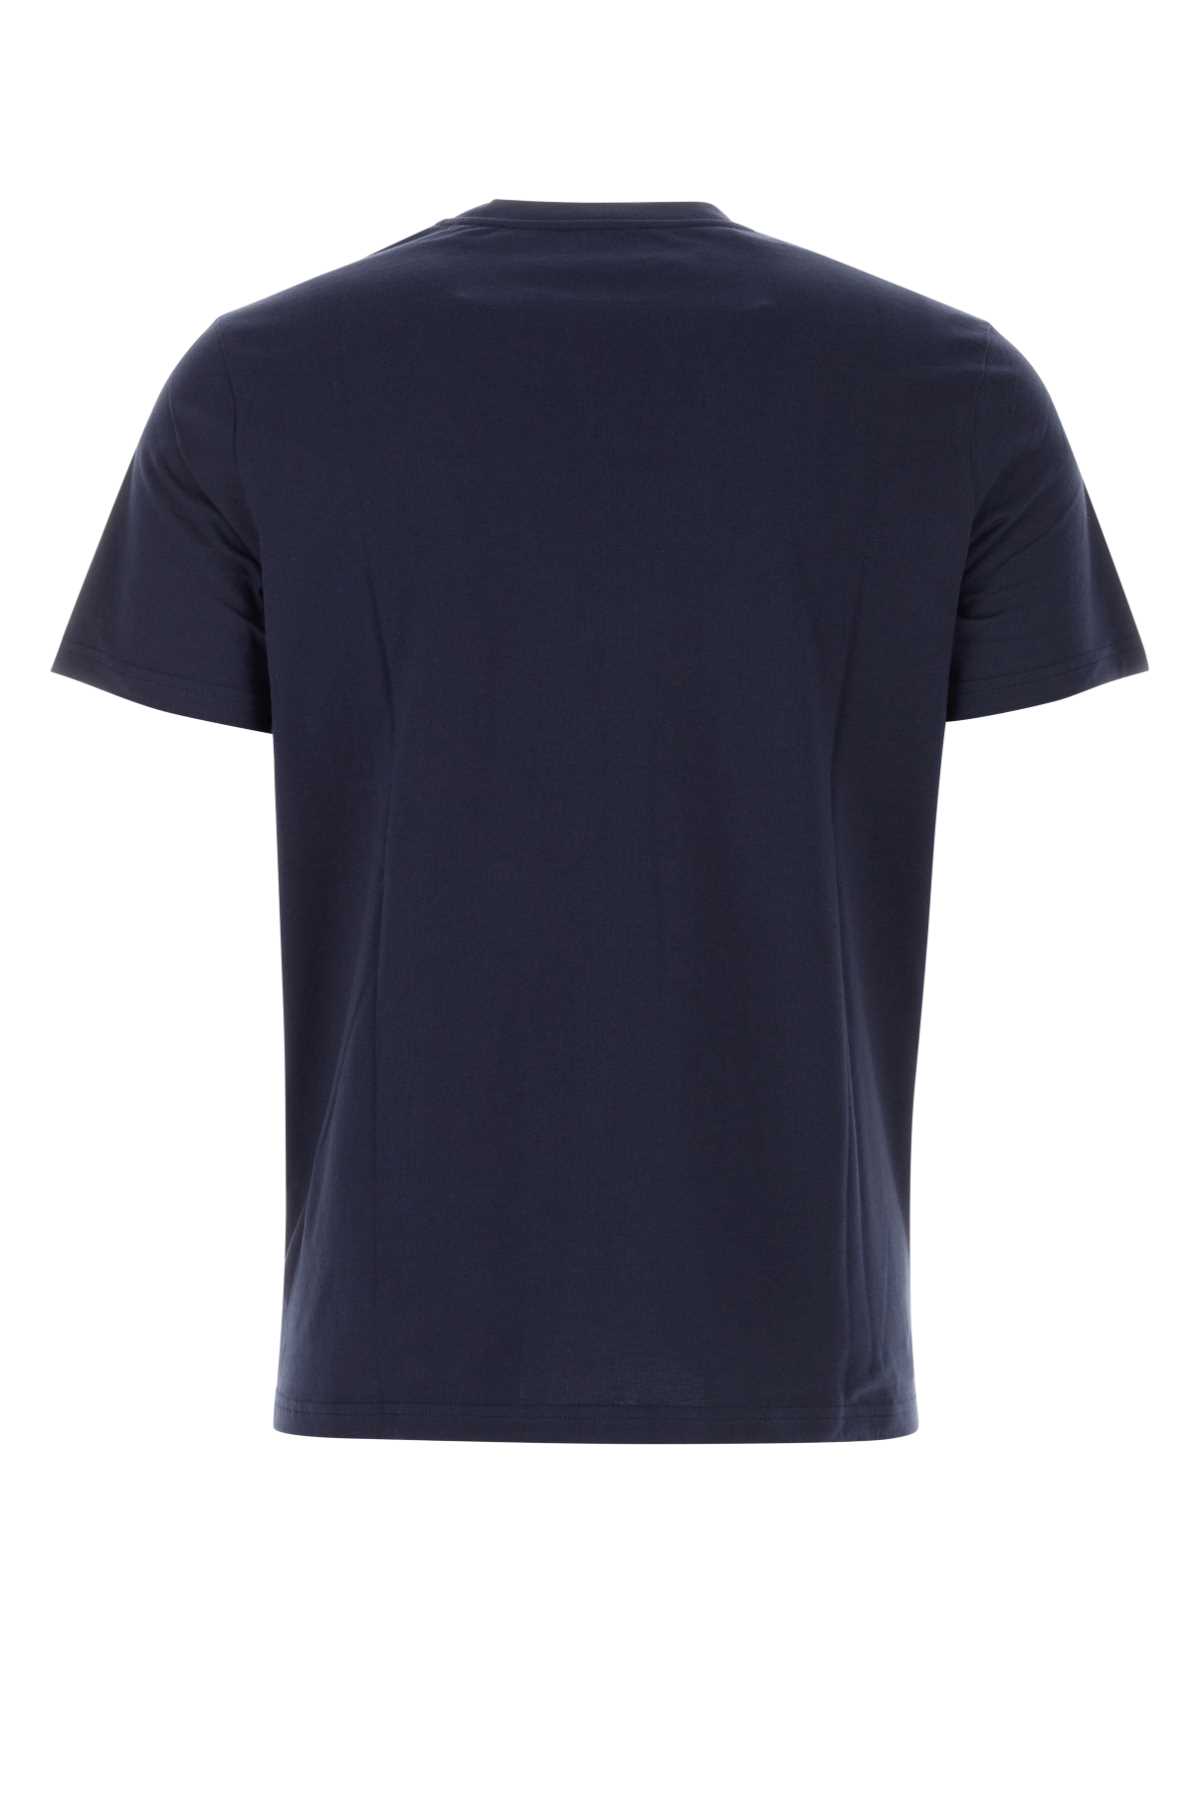 Apc Navy Blue Cotton Item T-shirt